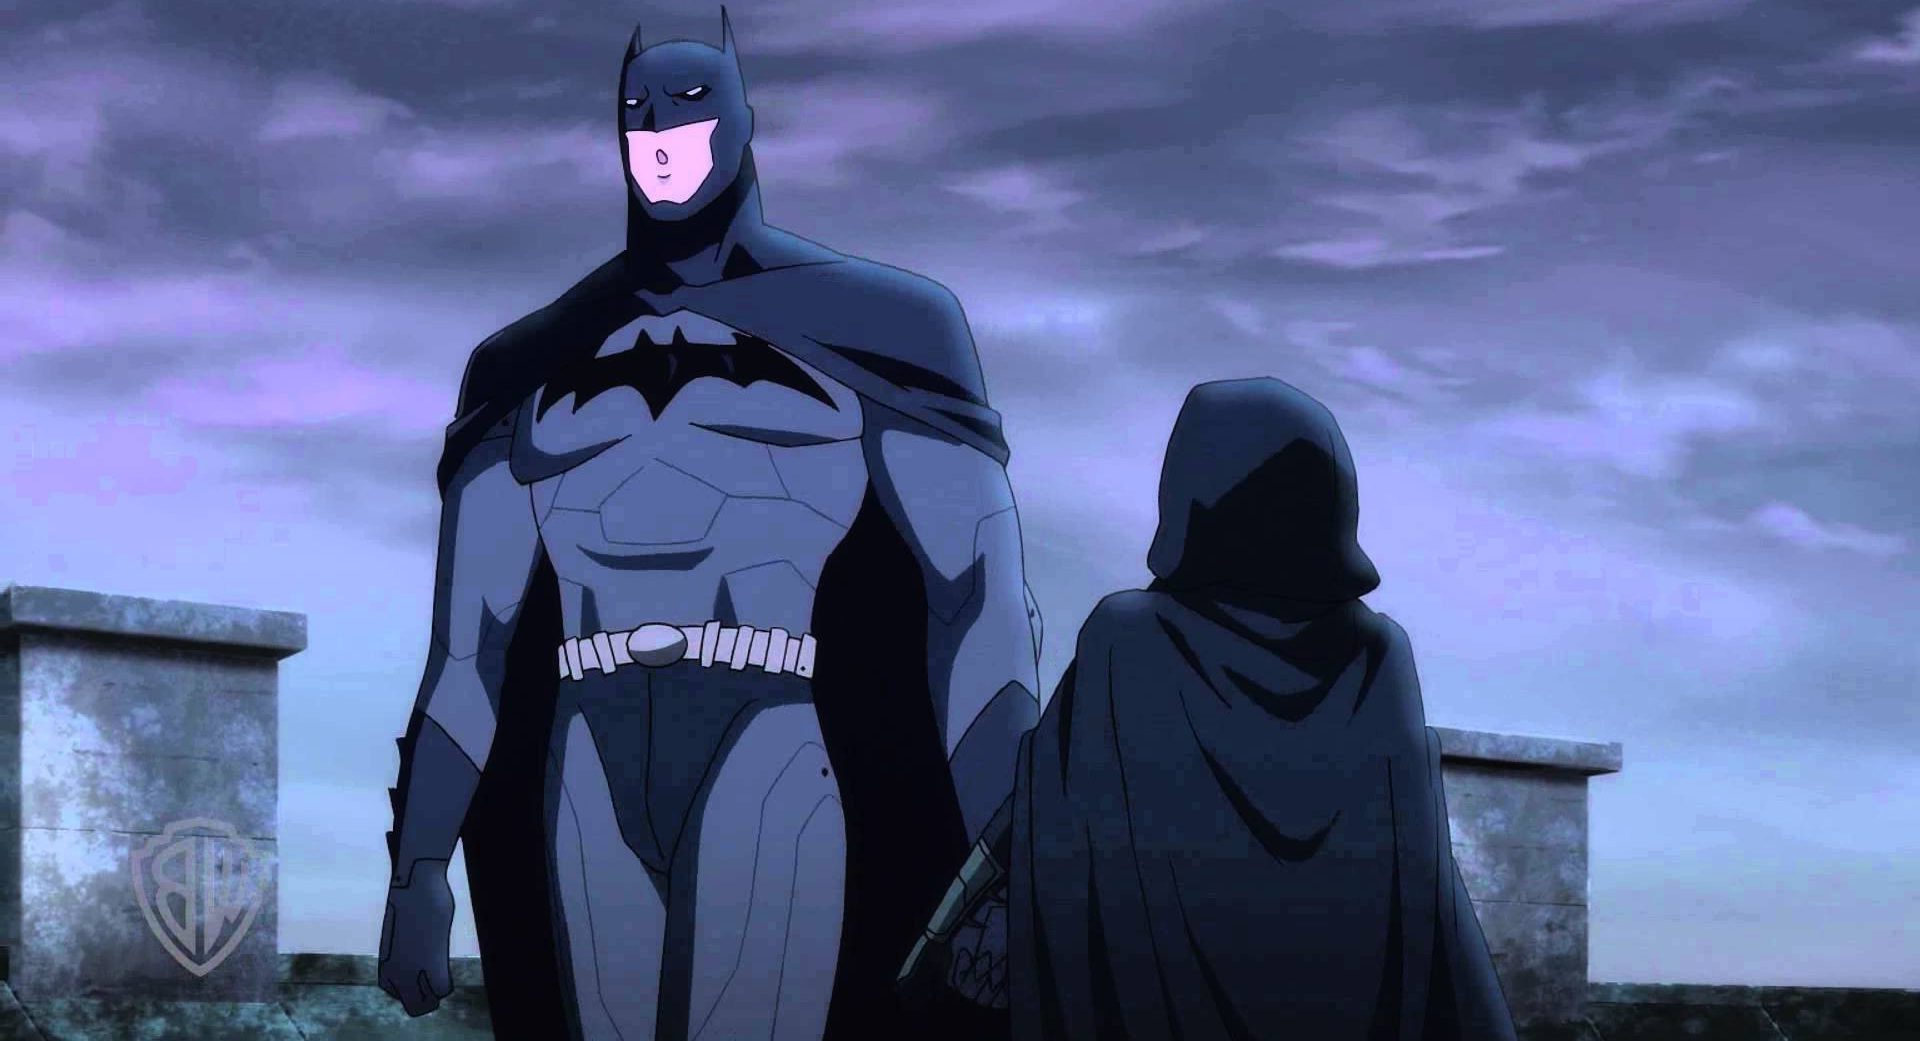 دانلود انیمیشن Batman vs. Robin 2015